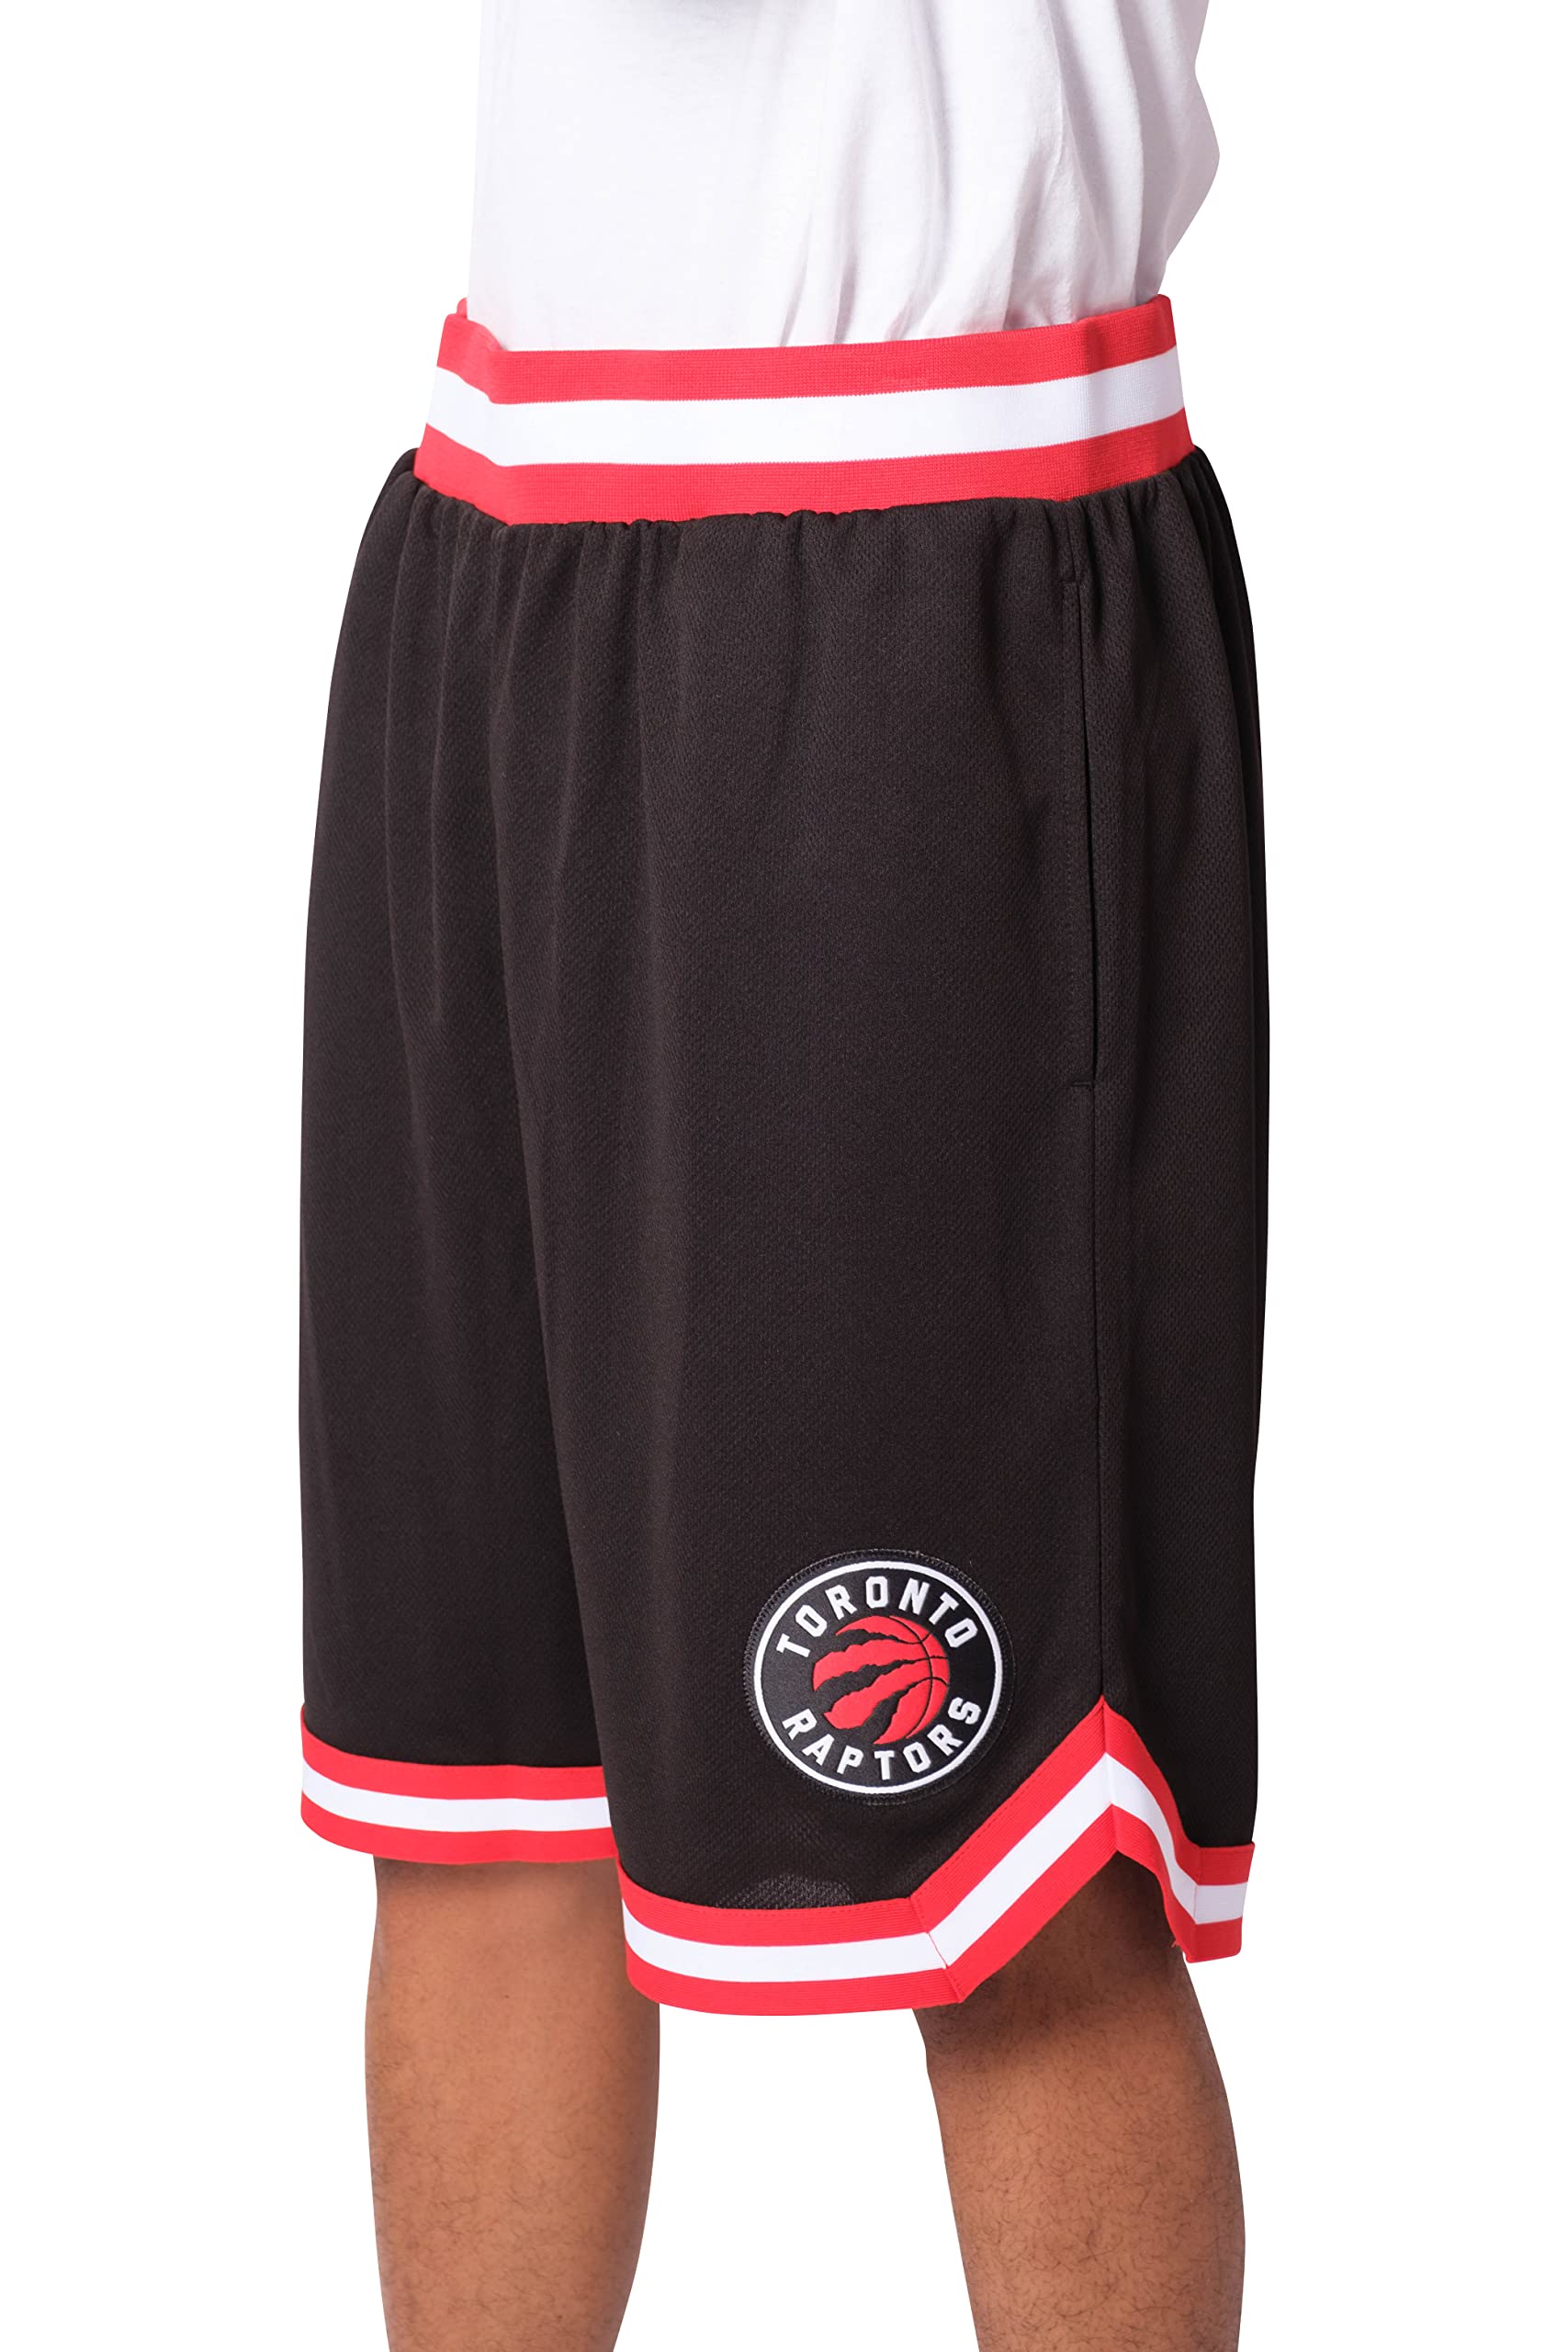 Ultra Game Ultra game NBA Toronto Raptors Mens Woven Basketball Shorts,  Team color, Small